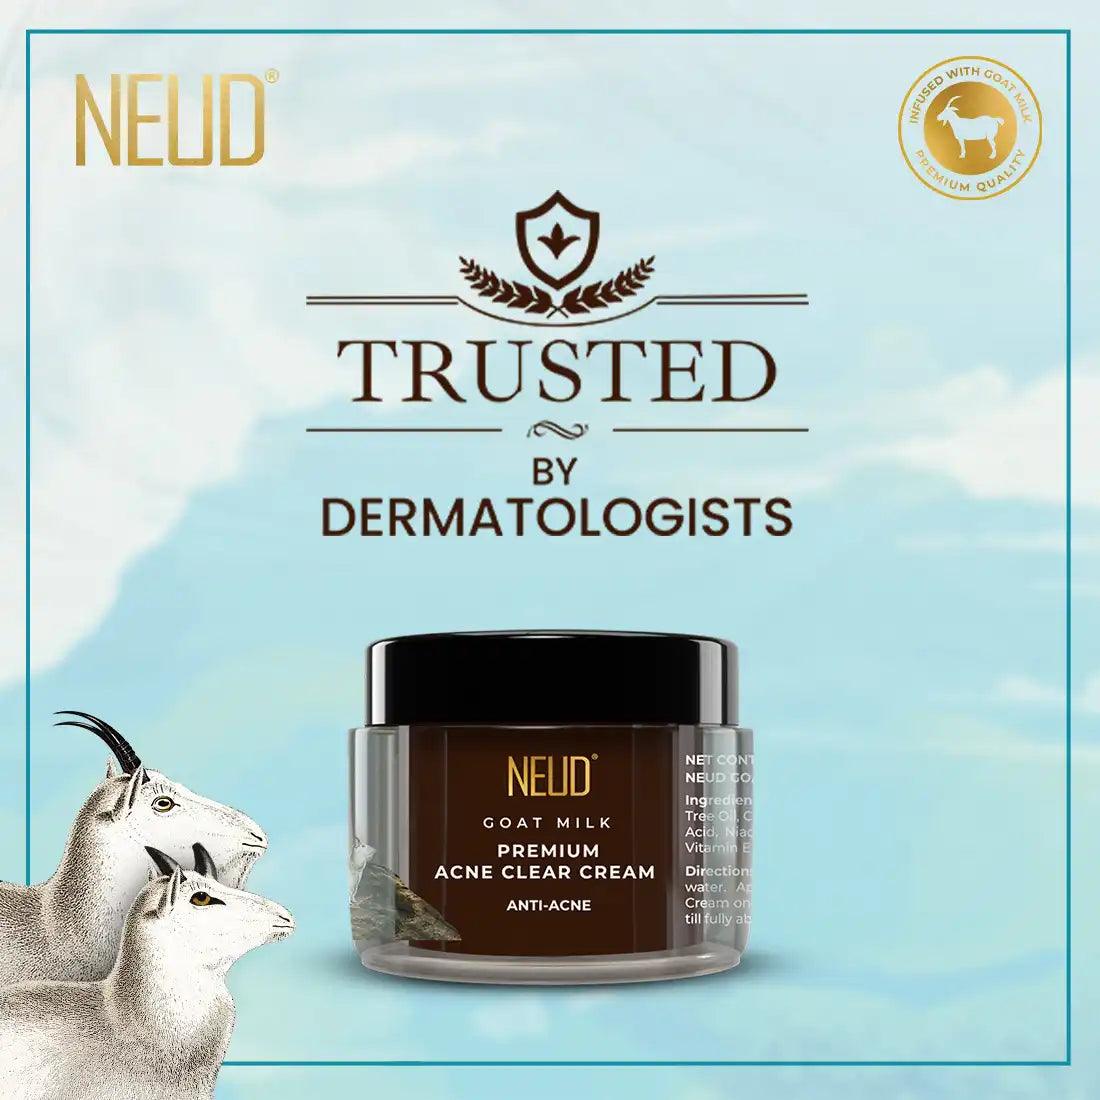 NEUD Goat Milk Acne Clear Cream is Trusted By Dermatologists - everteen-neud.com